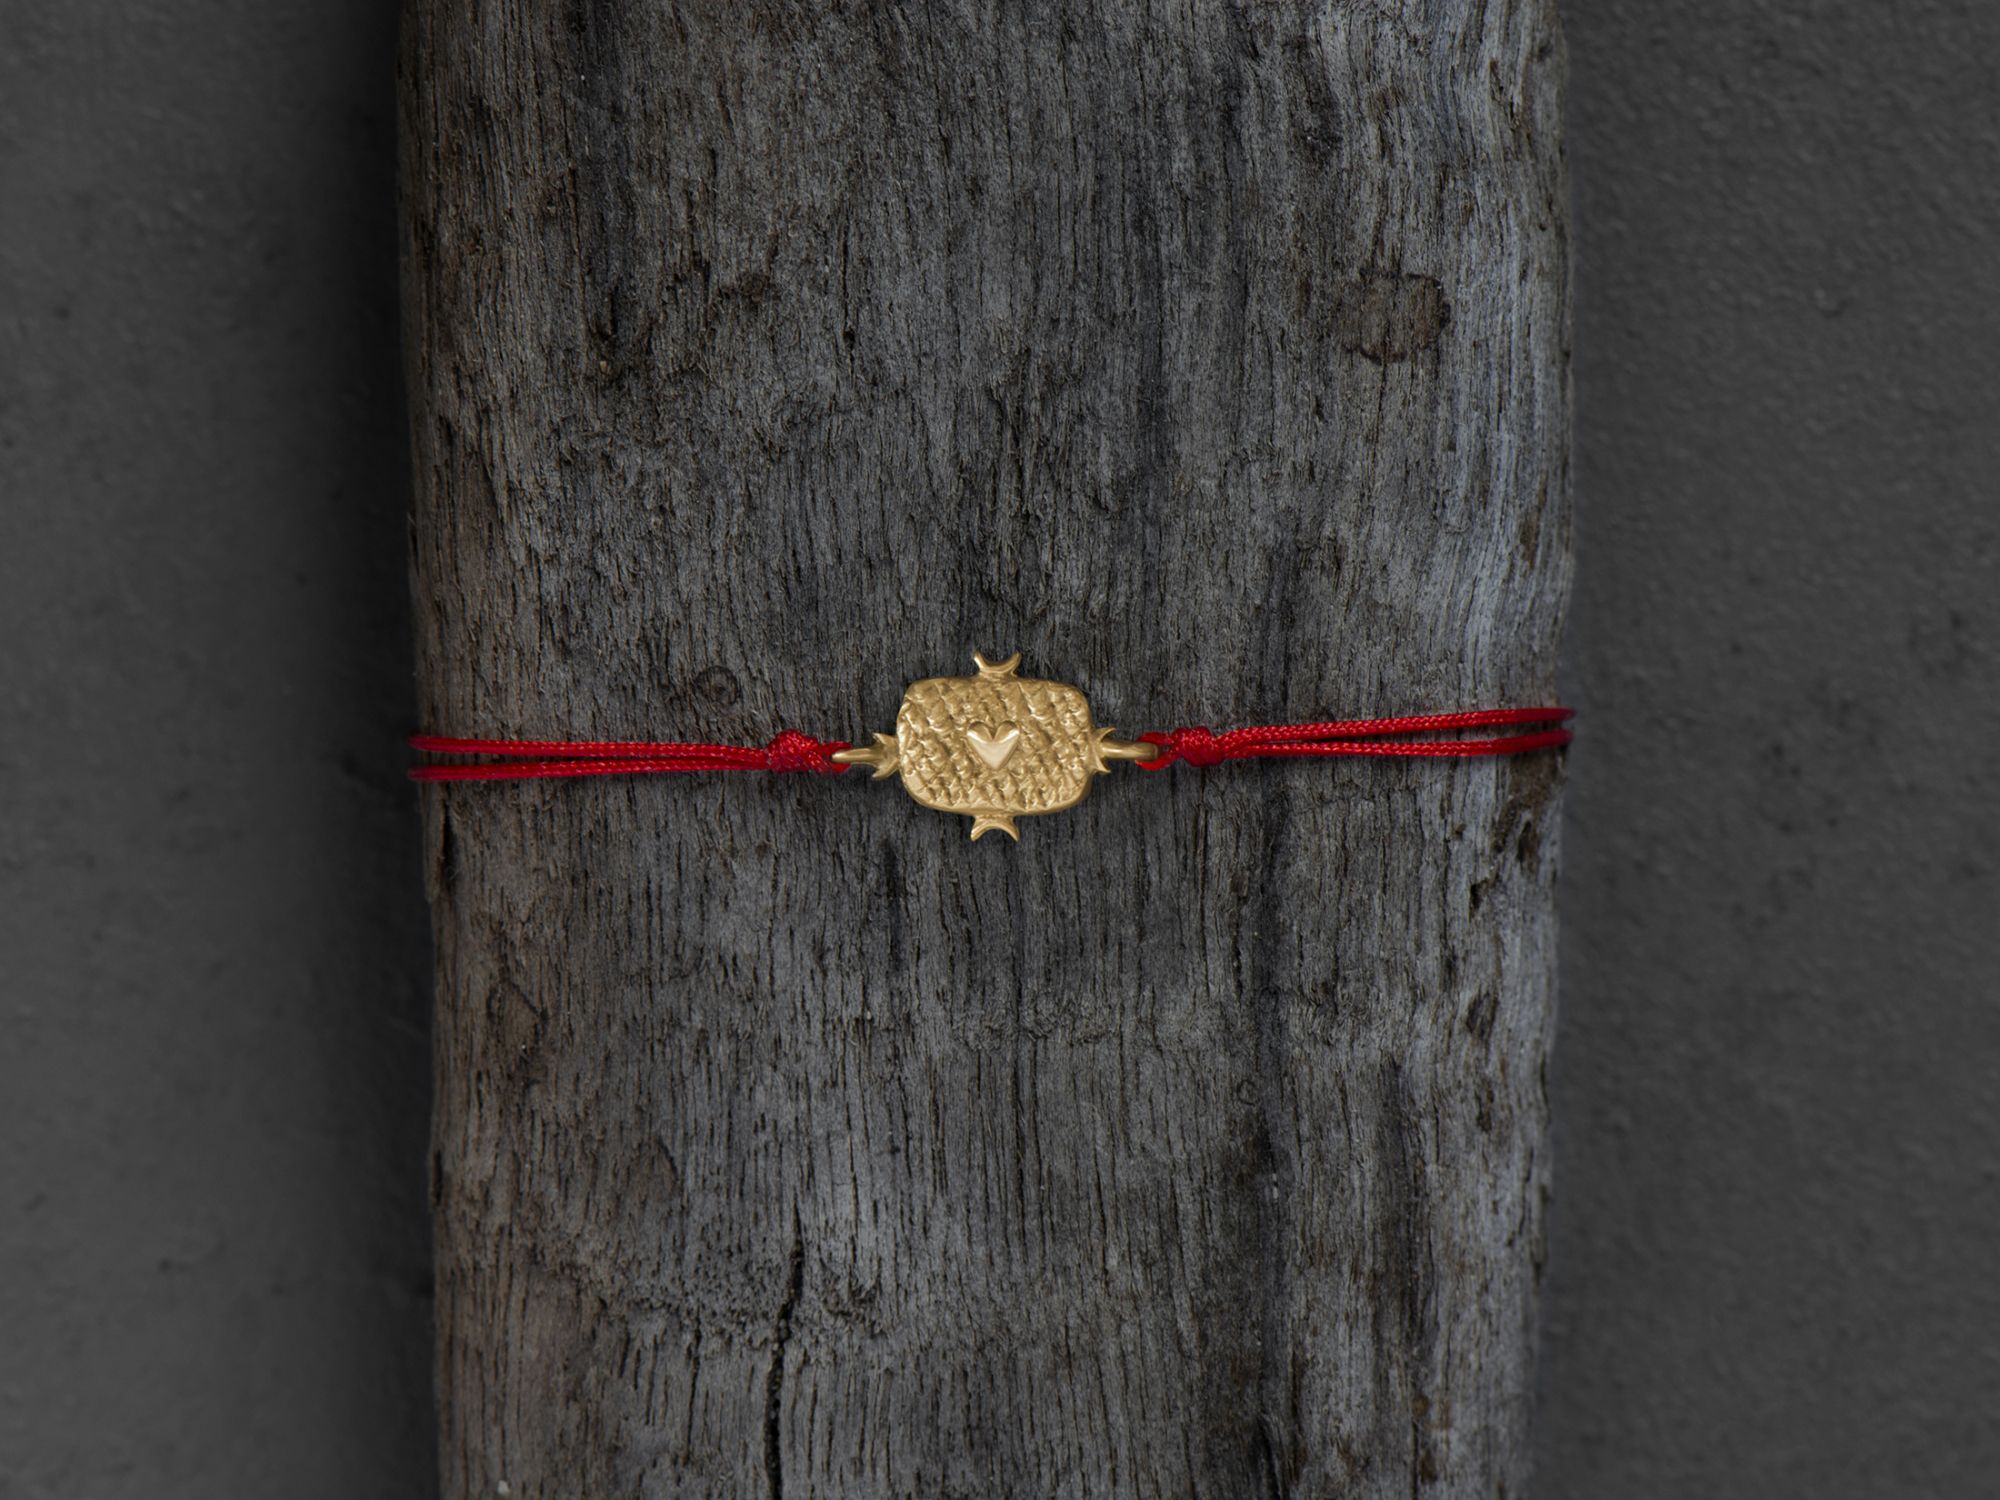 Lancelot gold bracelet by Emmanuelle Zysman